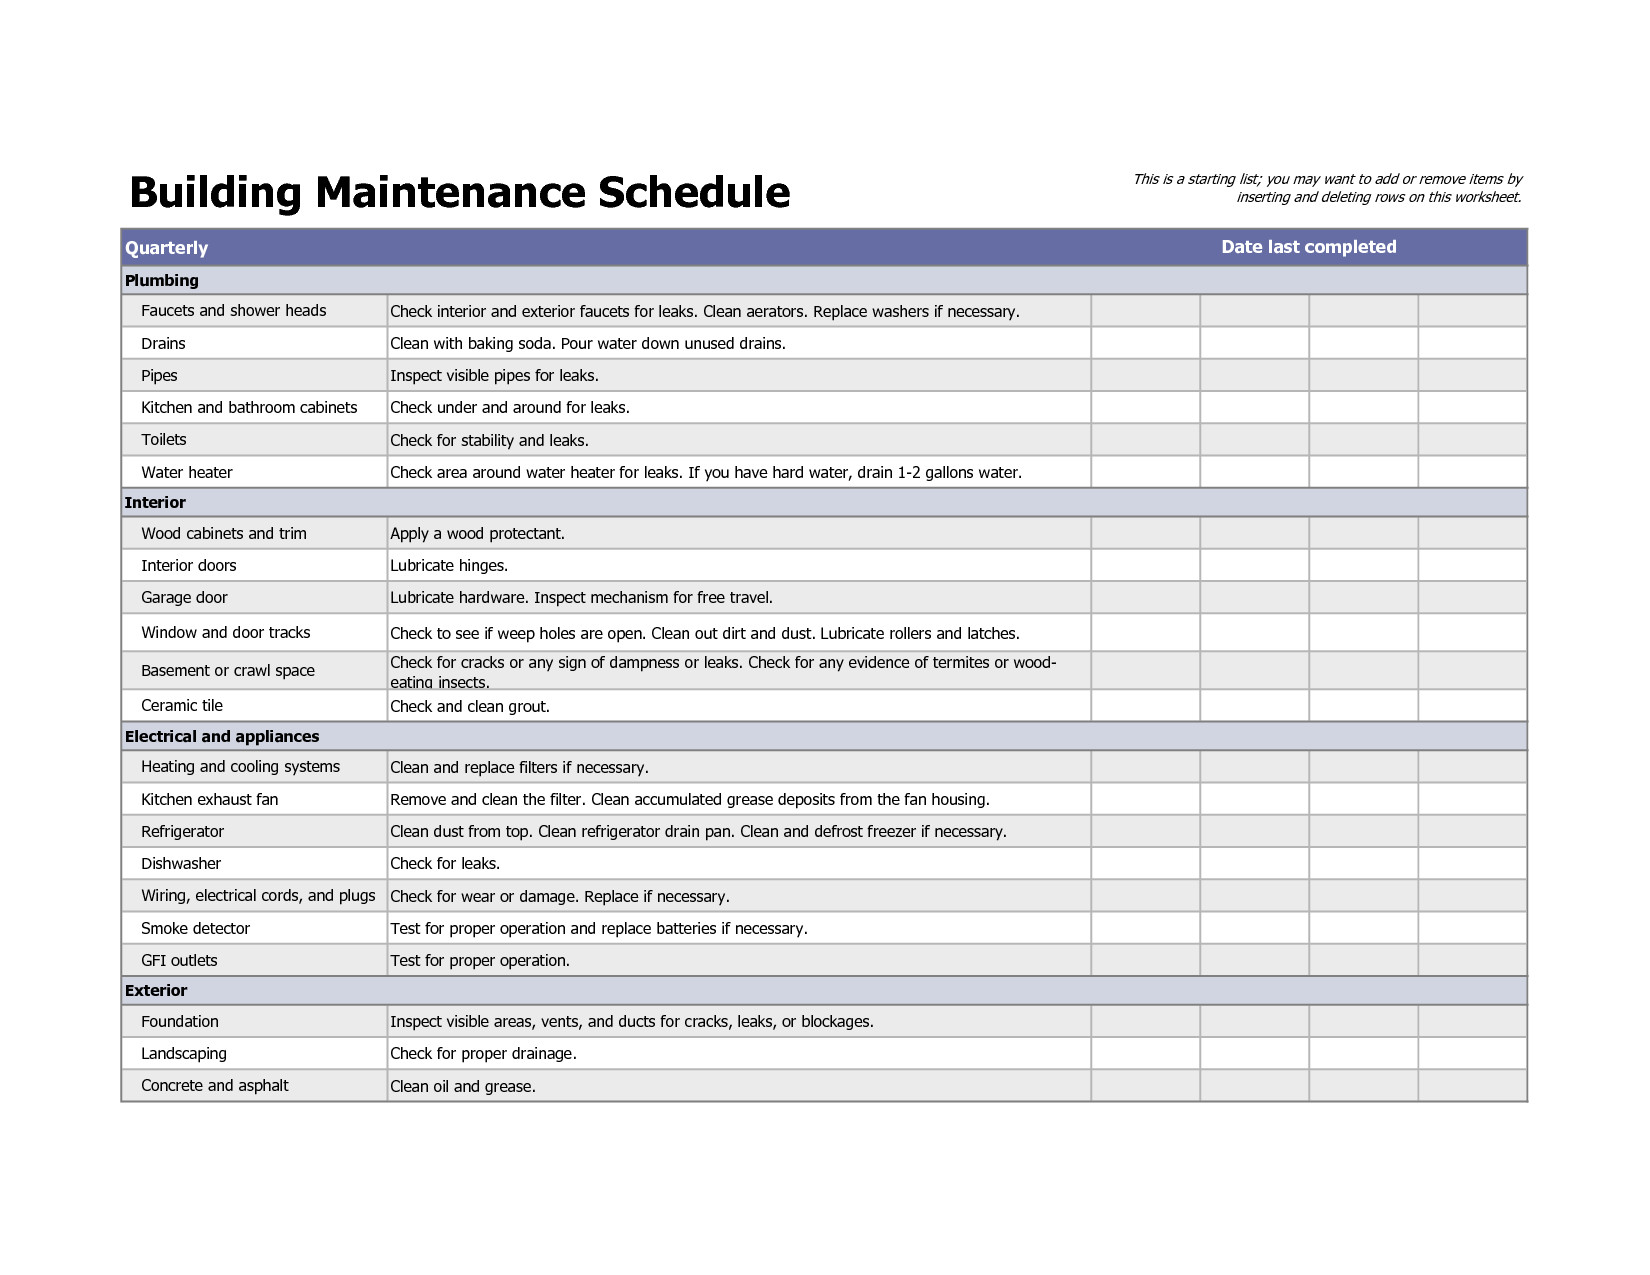 Preventive Maintenance Schedule Template Excel Building Maintenance Schedule Excel Template